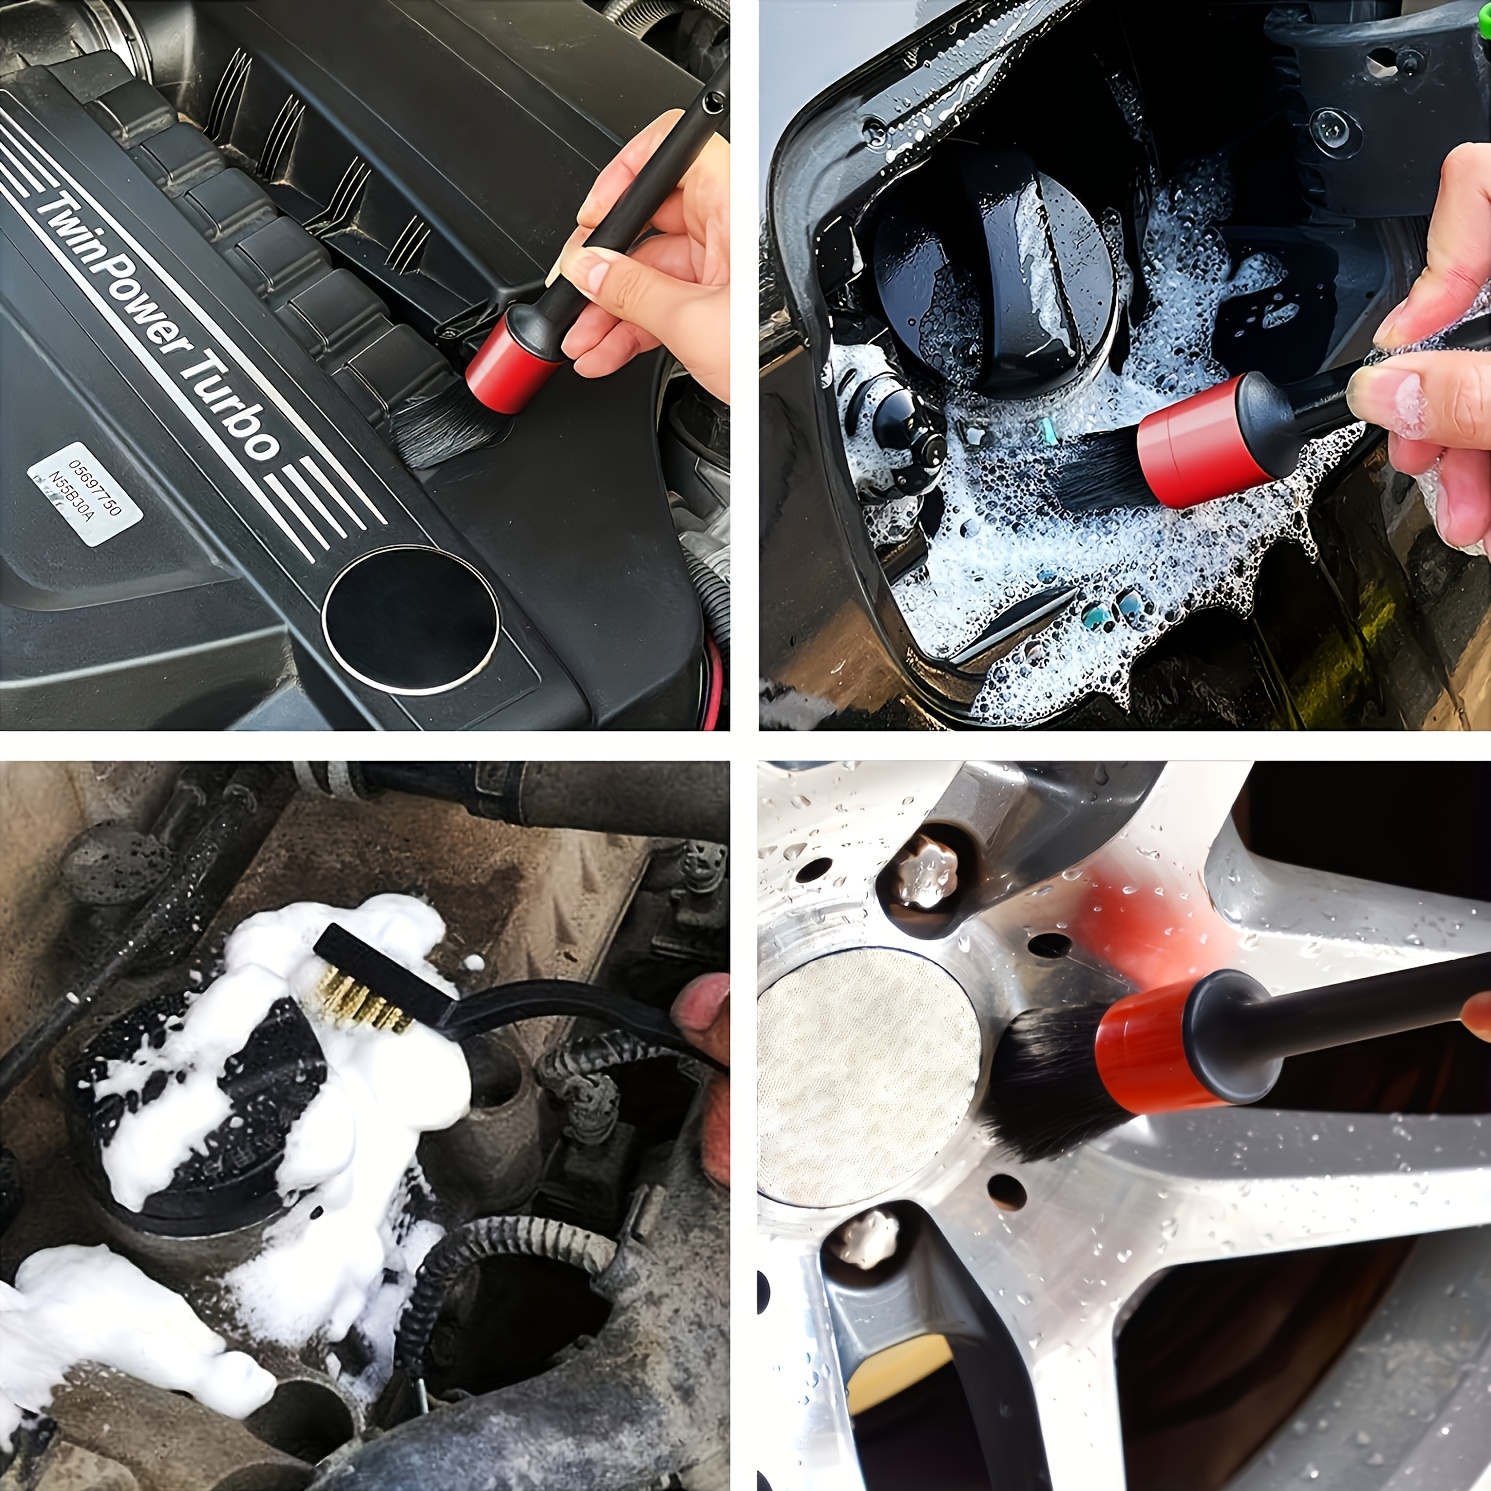 5Pcs Car Detail Brush Wash Auto Detailing Cleaning Kit Engine